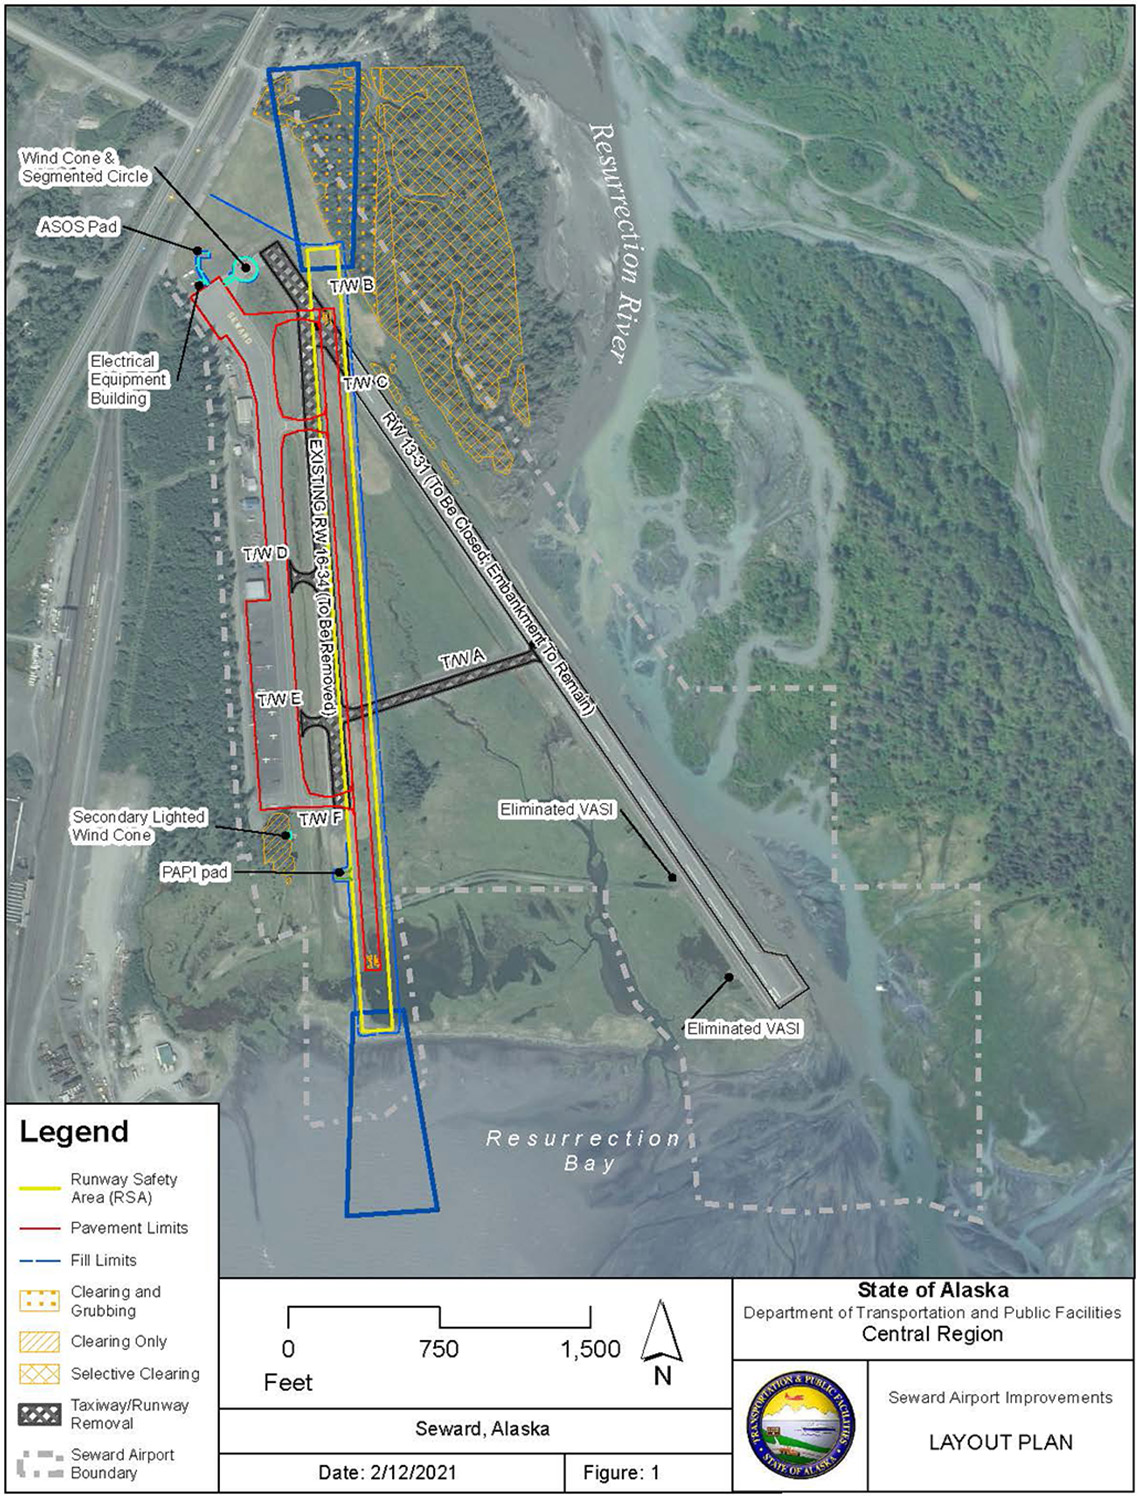 Seward Airport Improvements Layout Plan overhead image